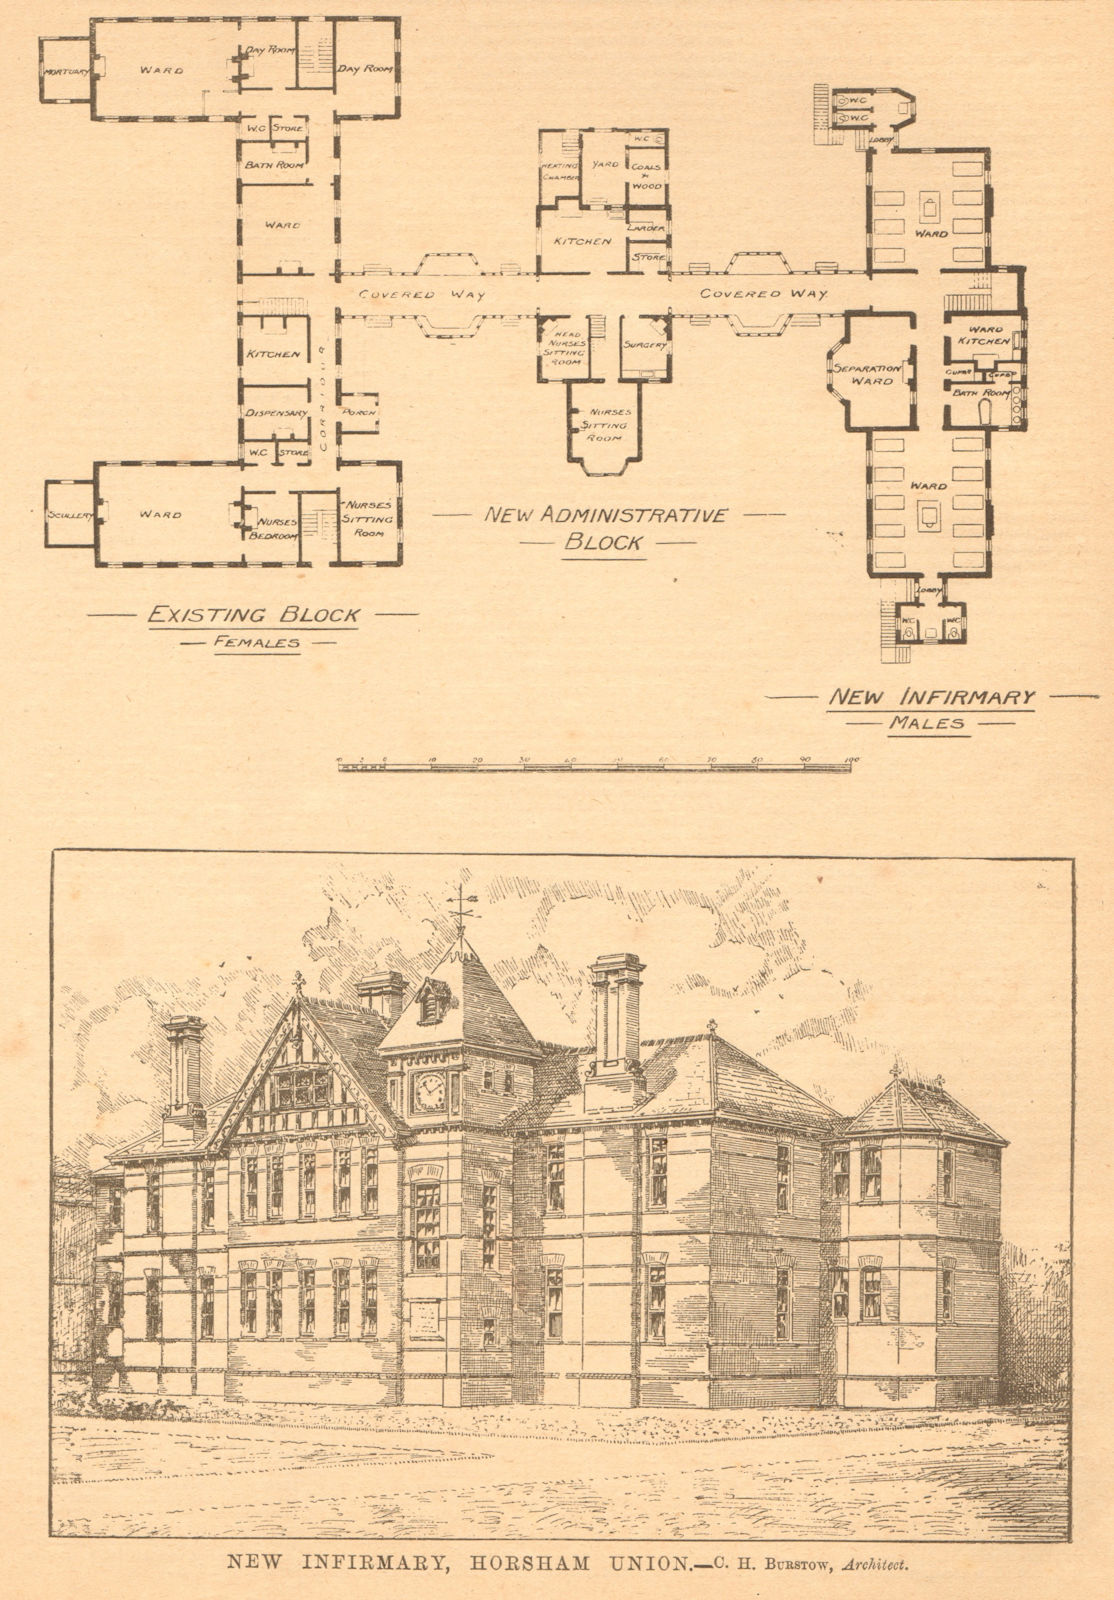 New Infirmary, Horsham Union workhouse. C.H. Burstow, Architect. Sussex 1900